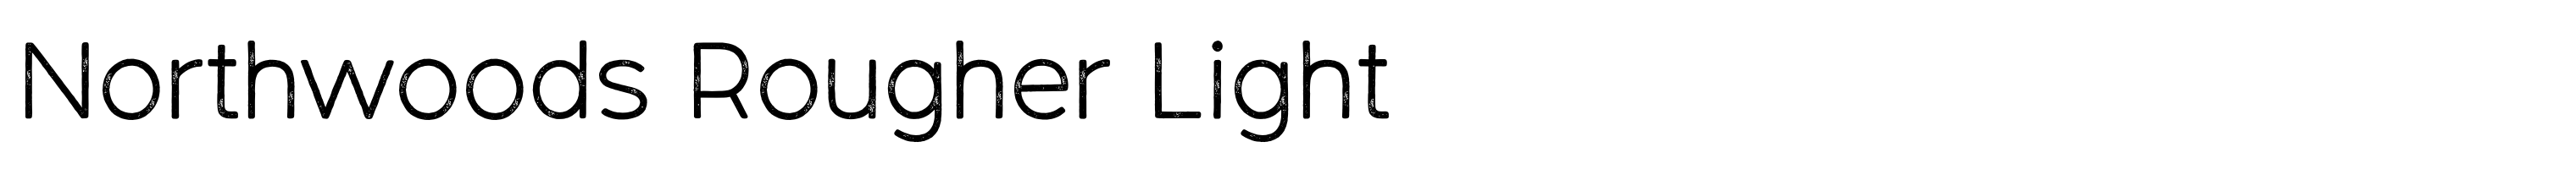 Northwoods Rougher Light